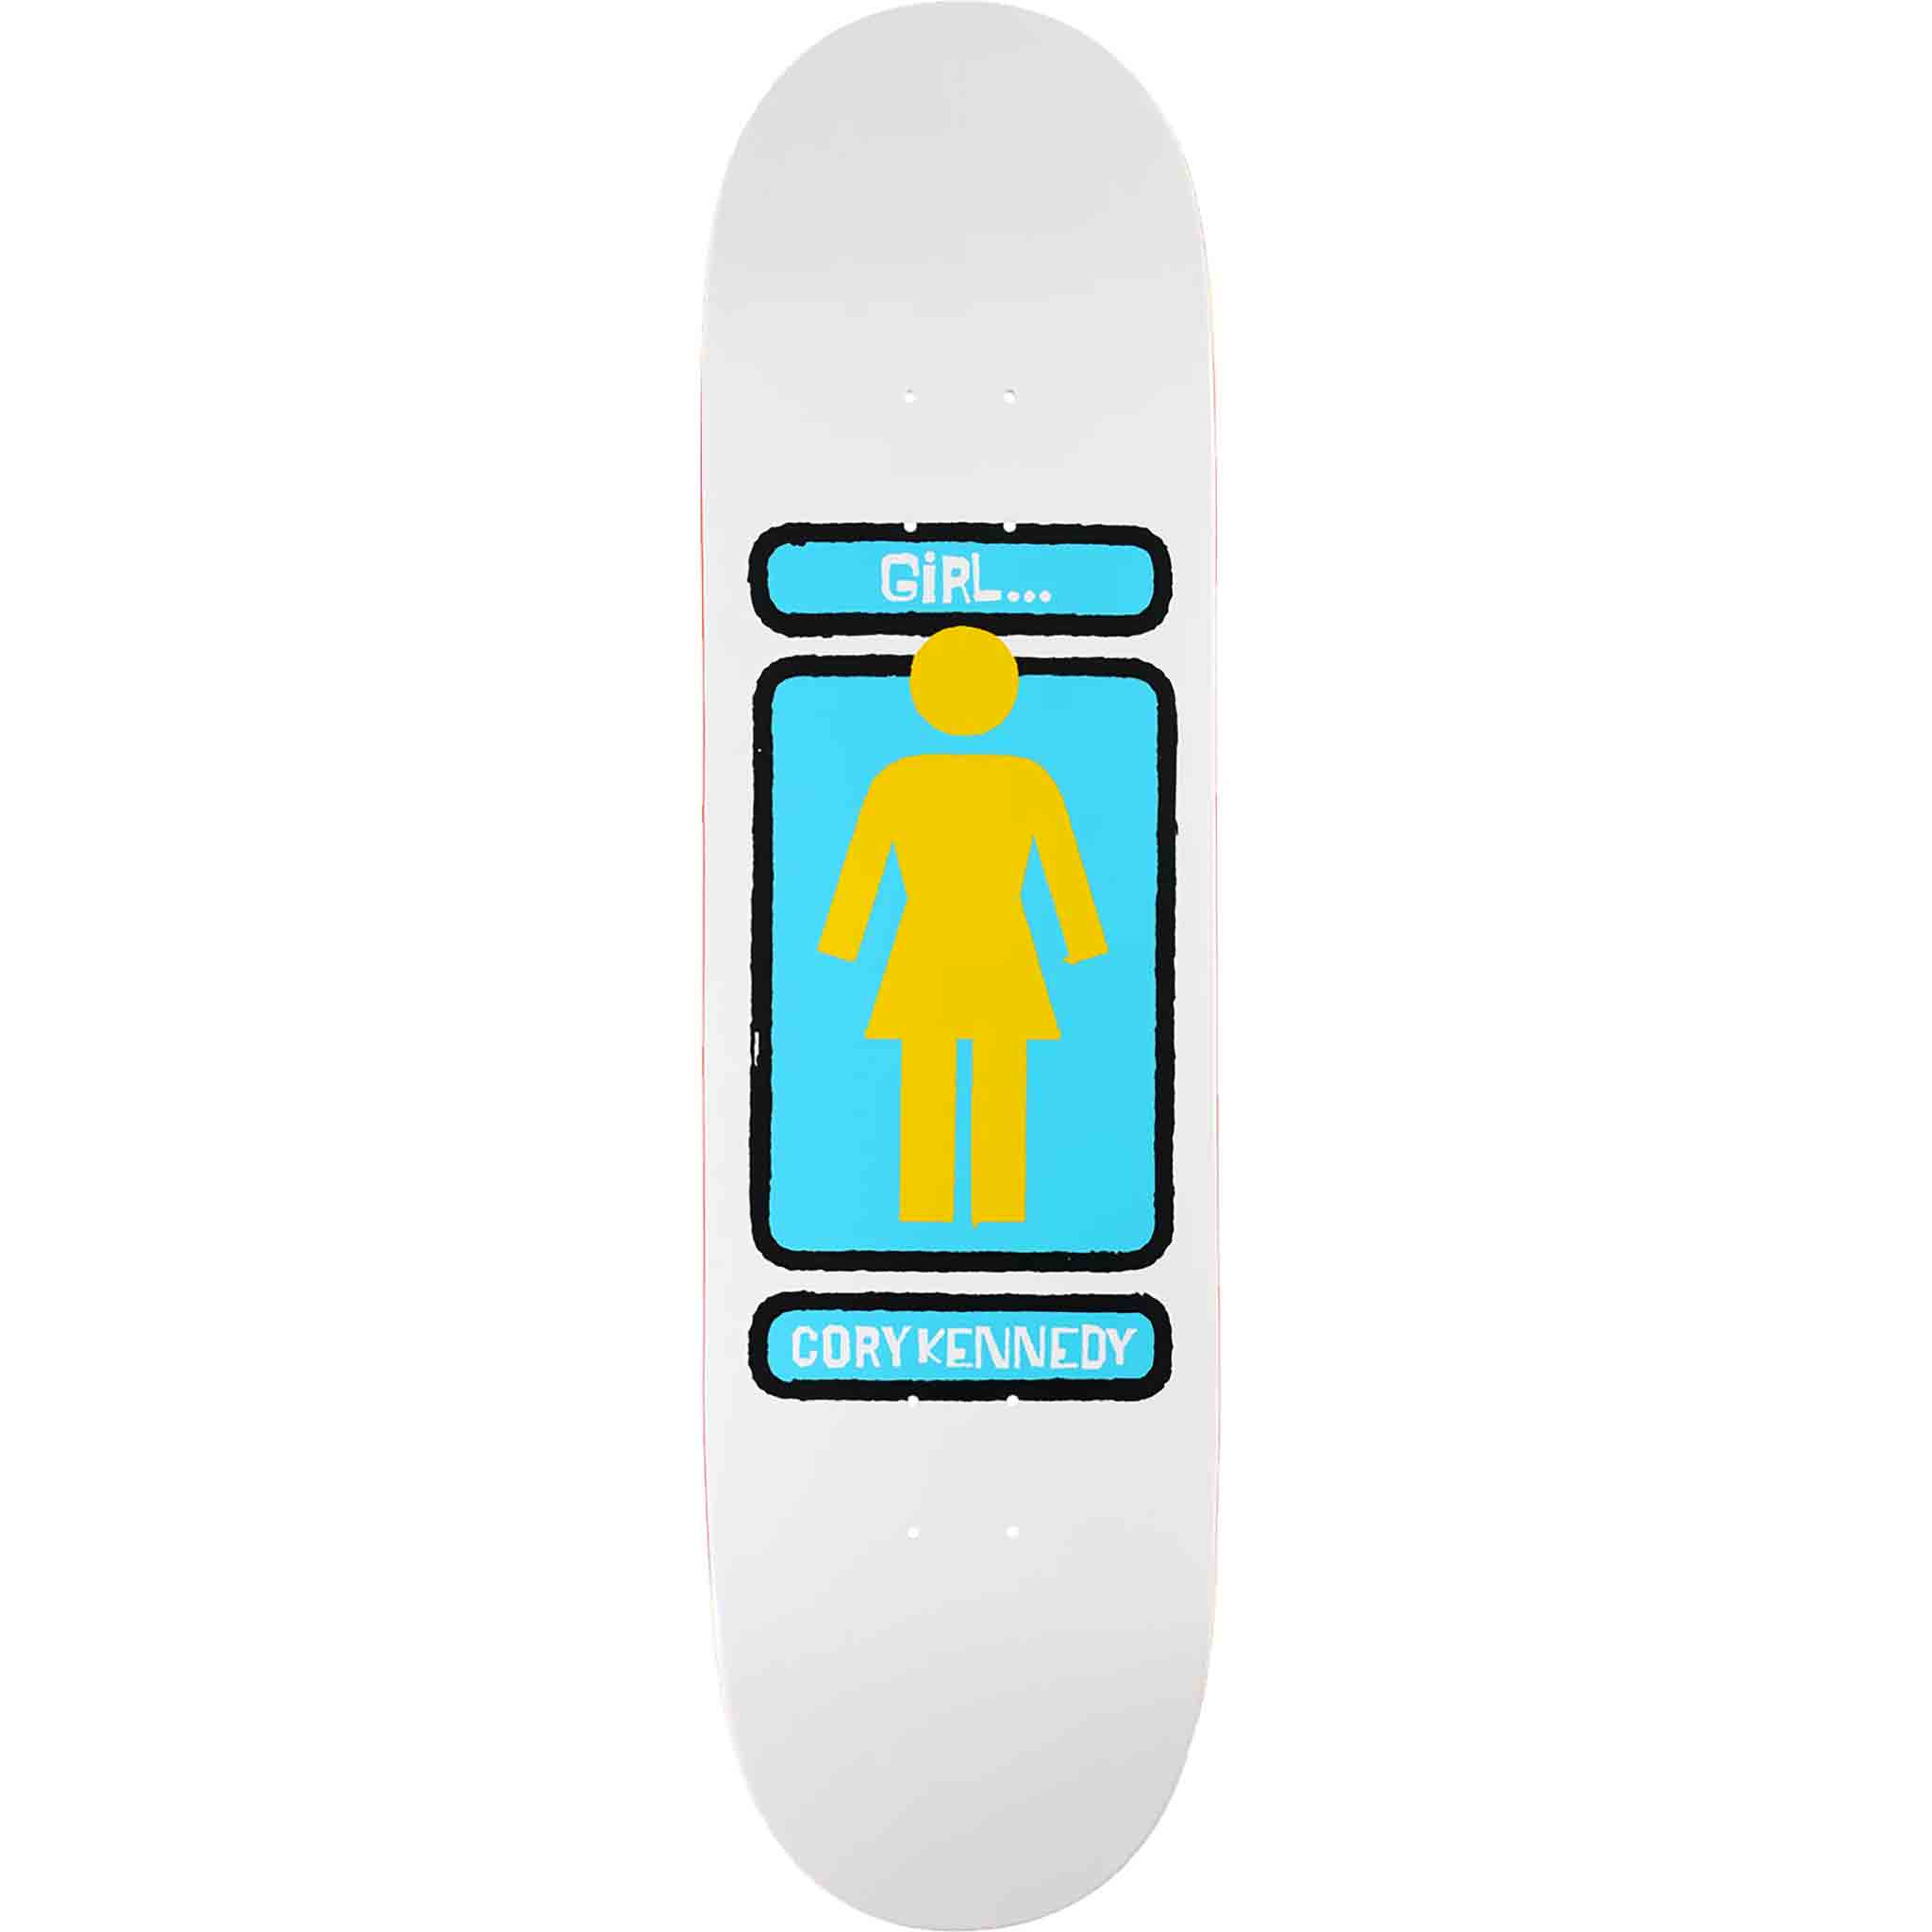 Girl Kennedy Hand Shakers 8.25" Skateboard Deck Skateboard